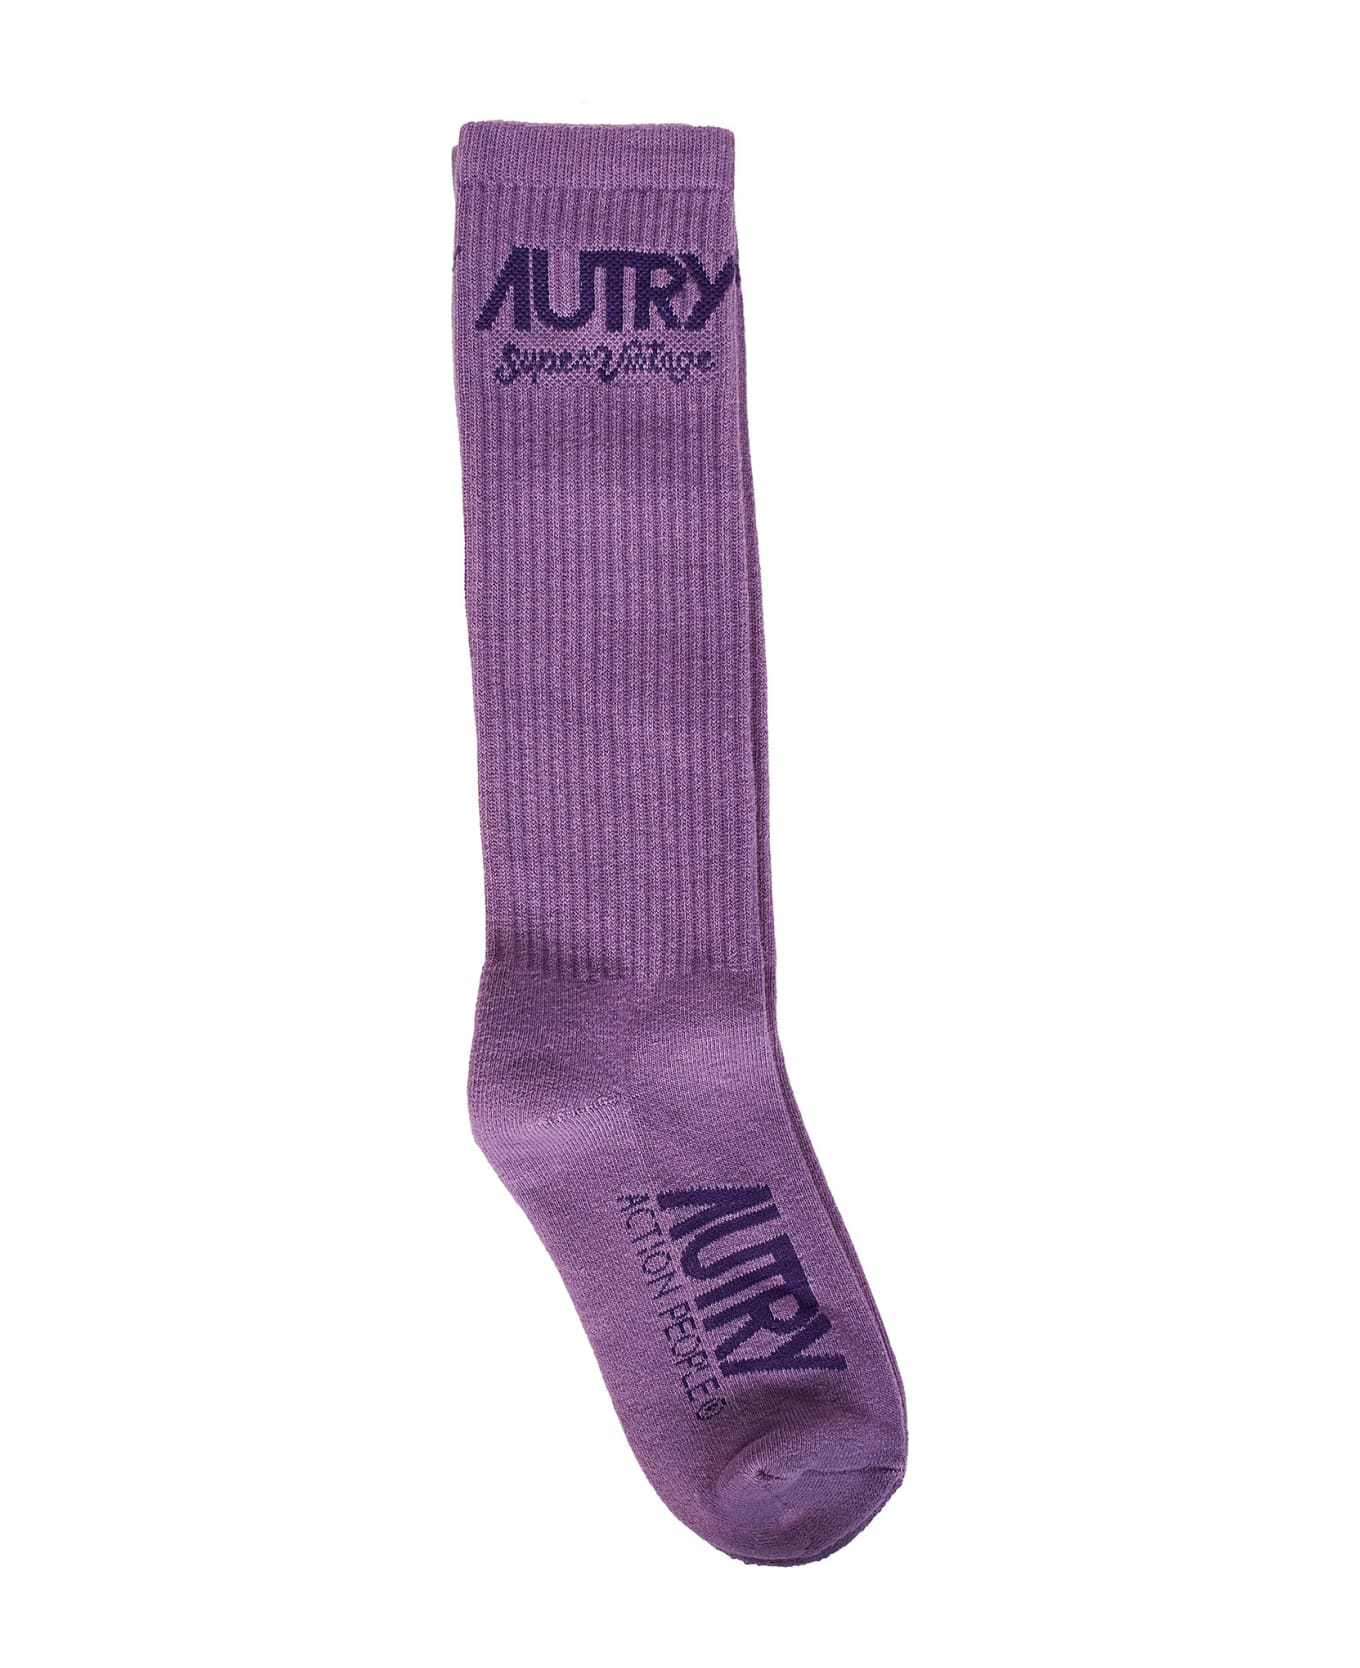 Autry Supervintage Socks - Tinto Lilac 靴下